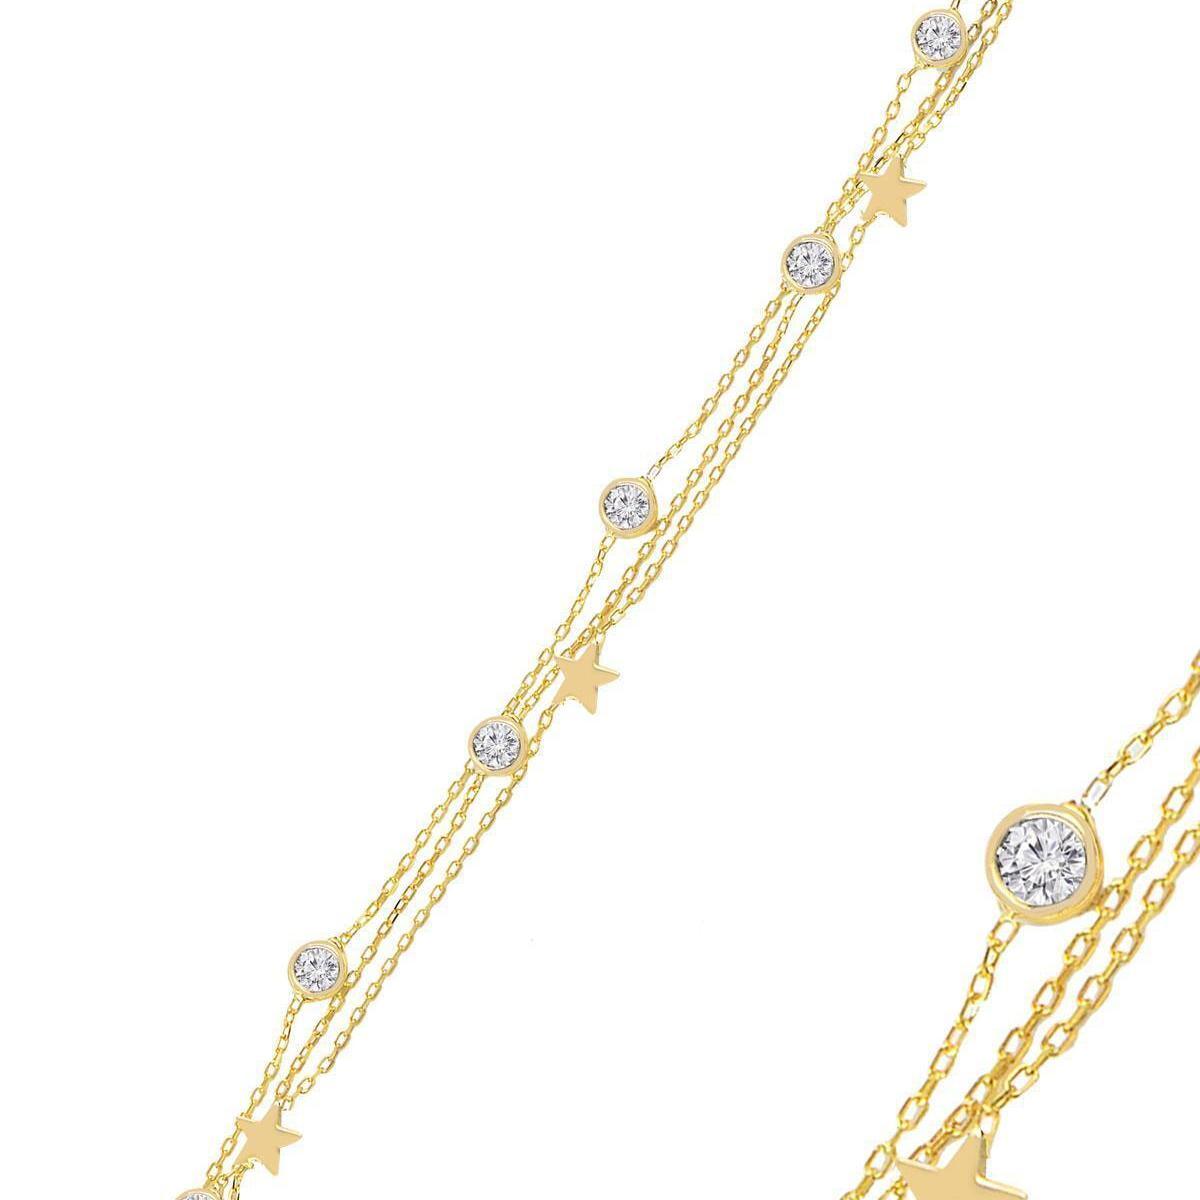 Star Solitaire Silver Bracelet • Solitaire Gold Bracelet - Trending Silver Gifts